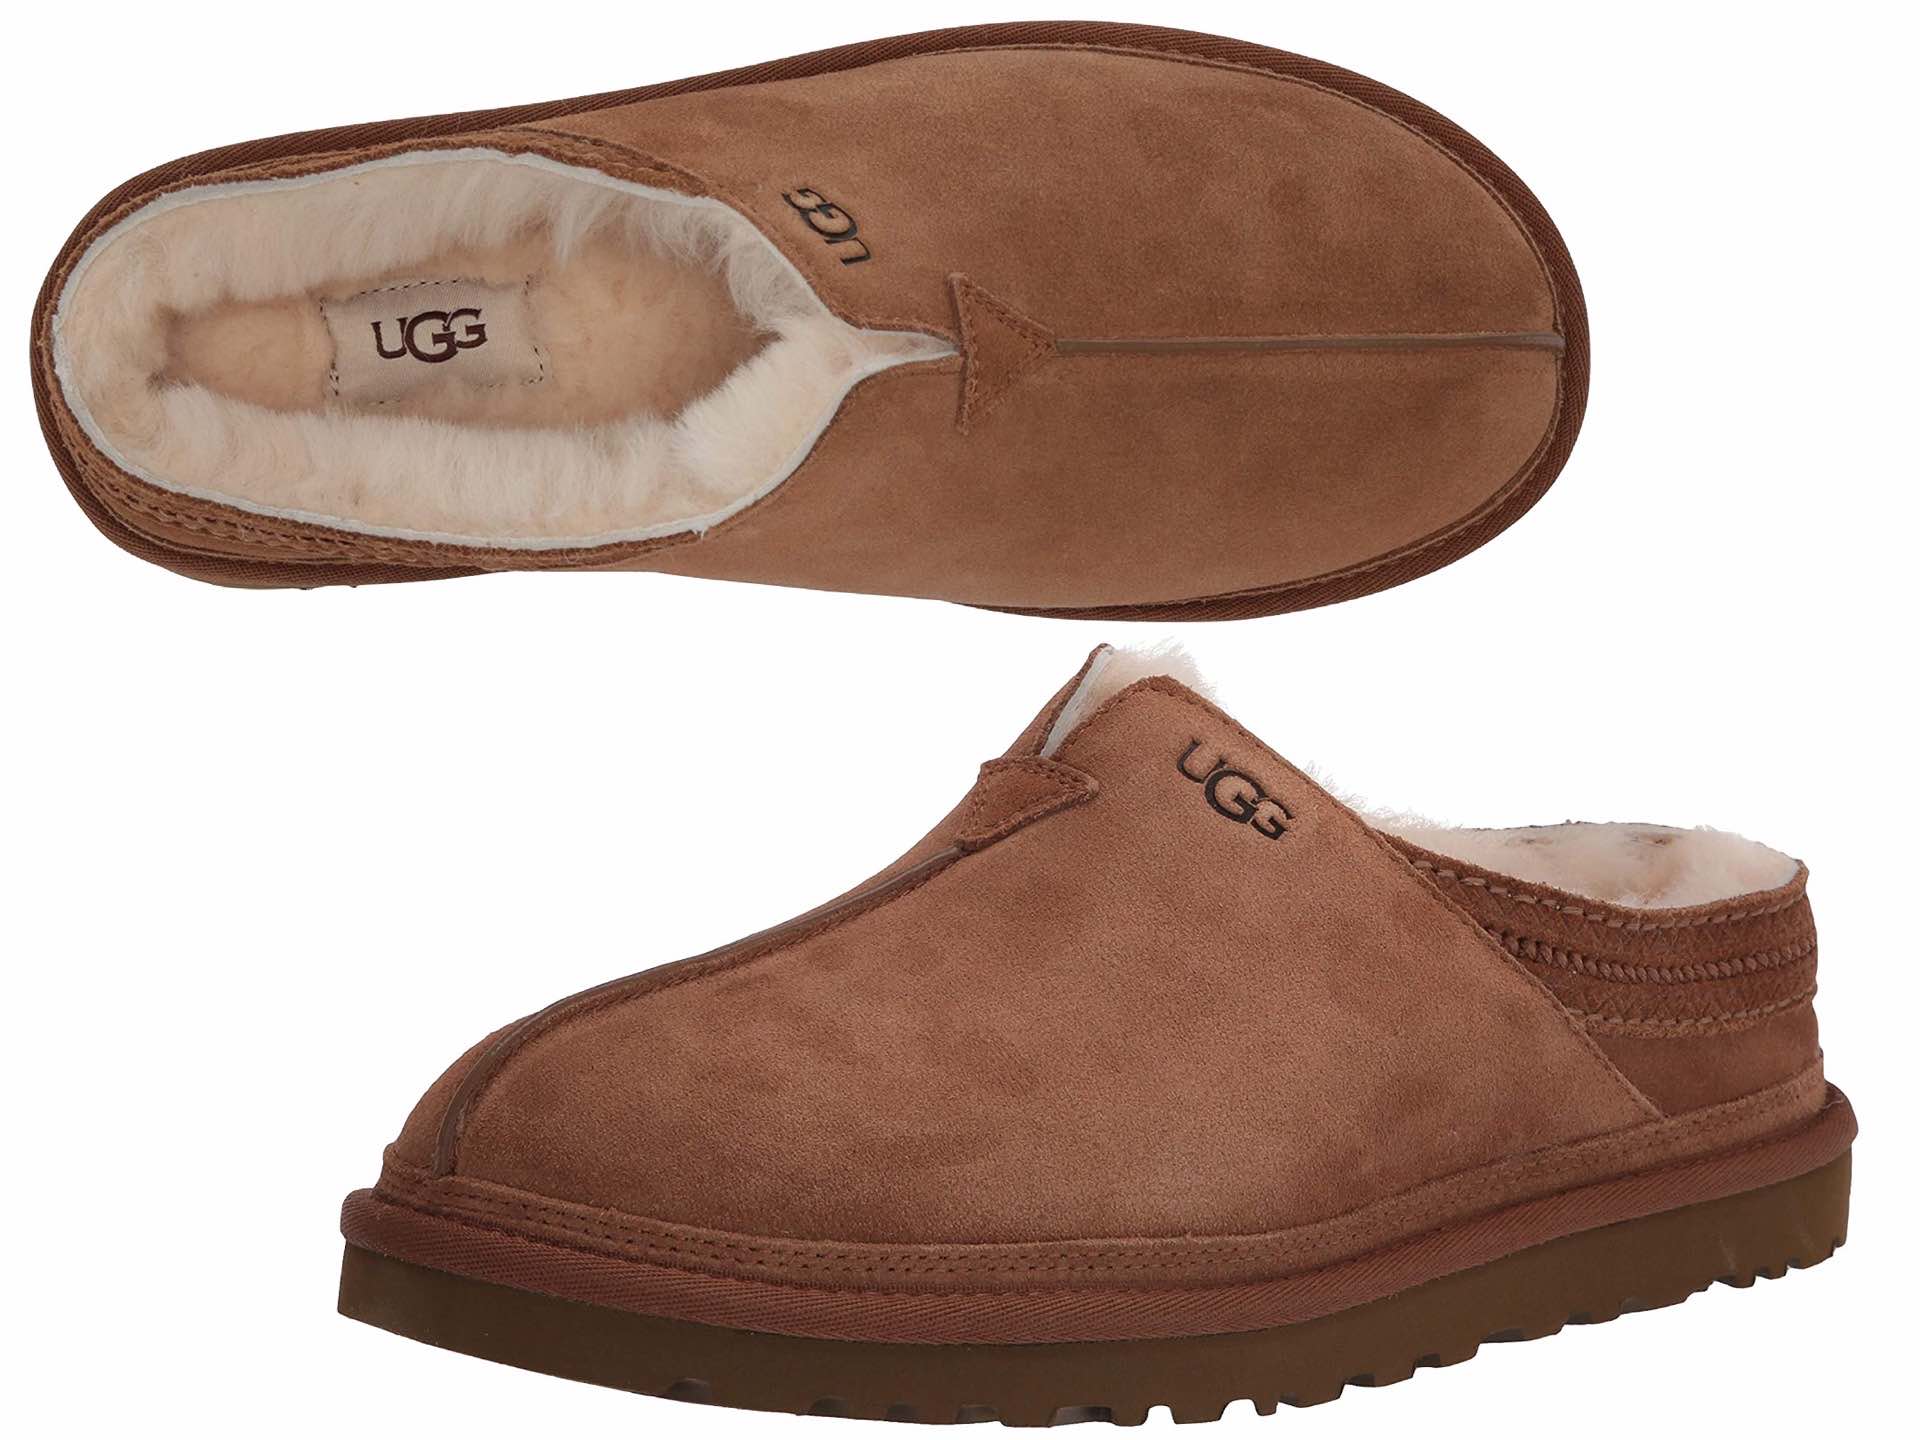 UGG “Neuman” men’s suede slippers. ($120 per pair)